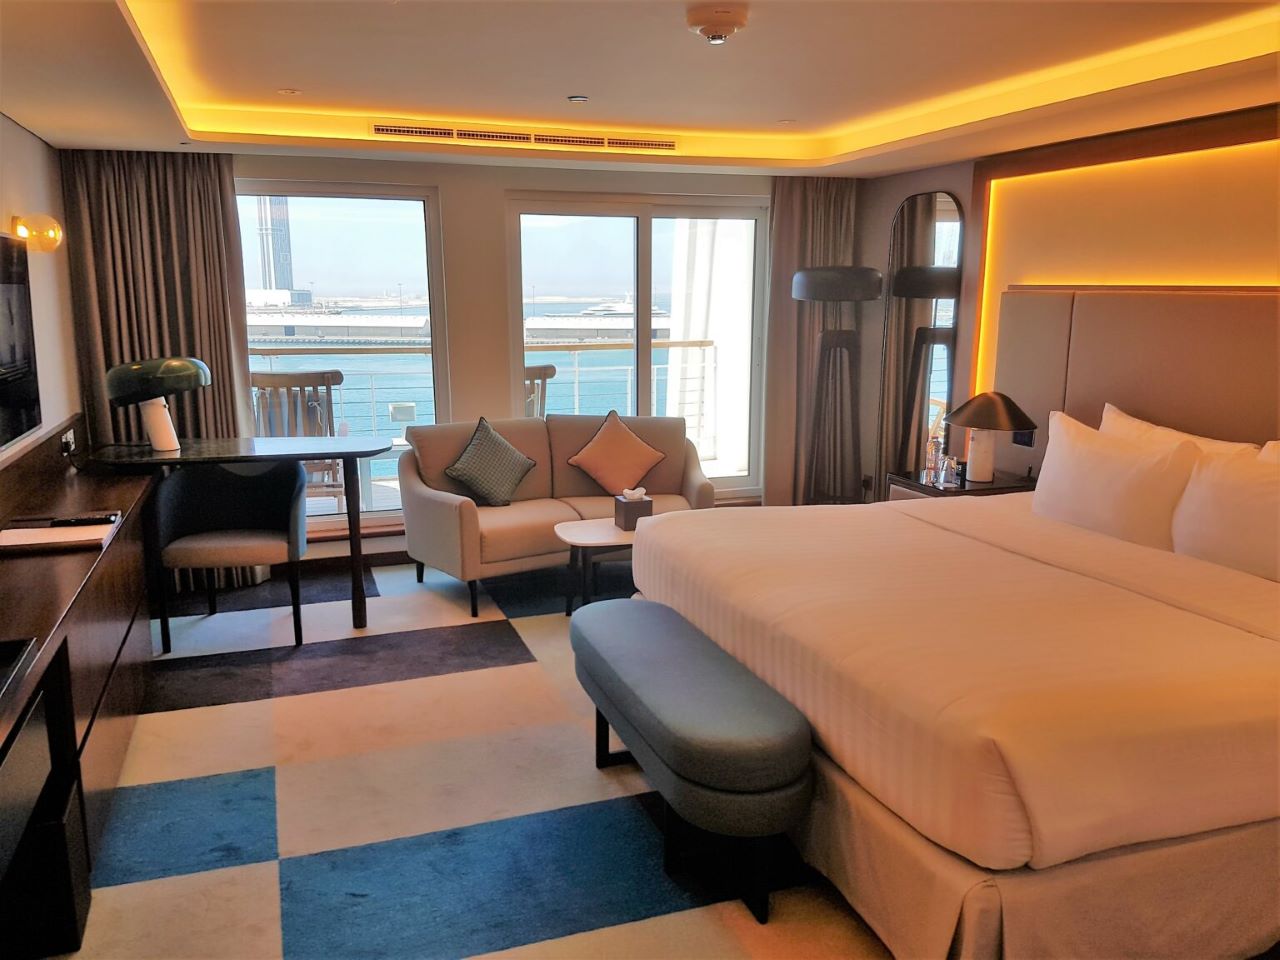  QE2 hotel Dubai room 